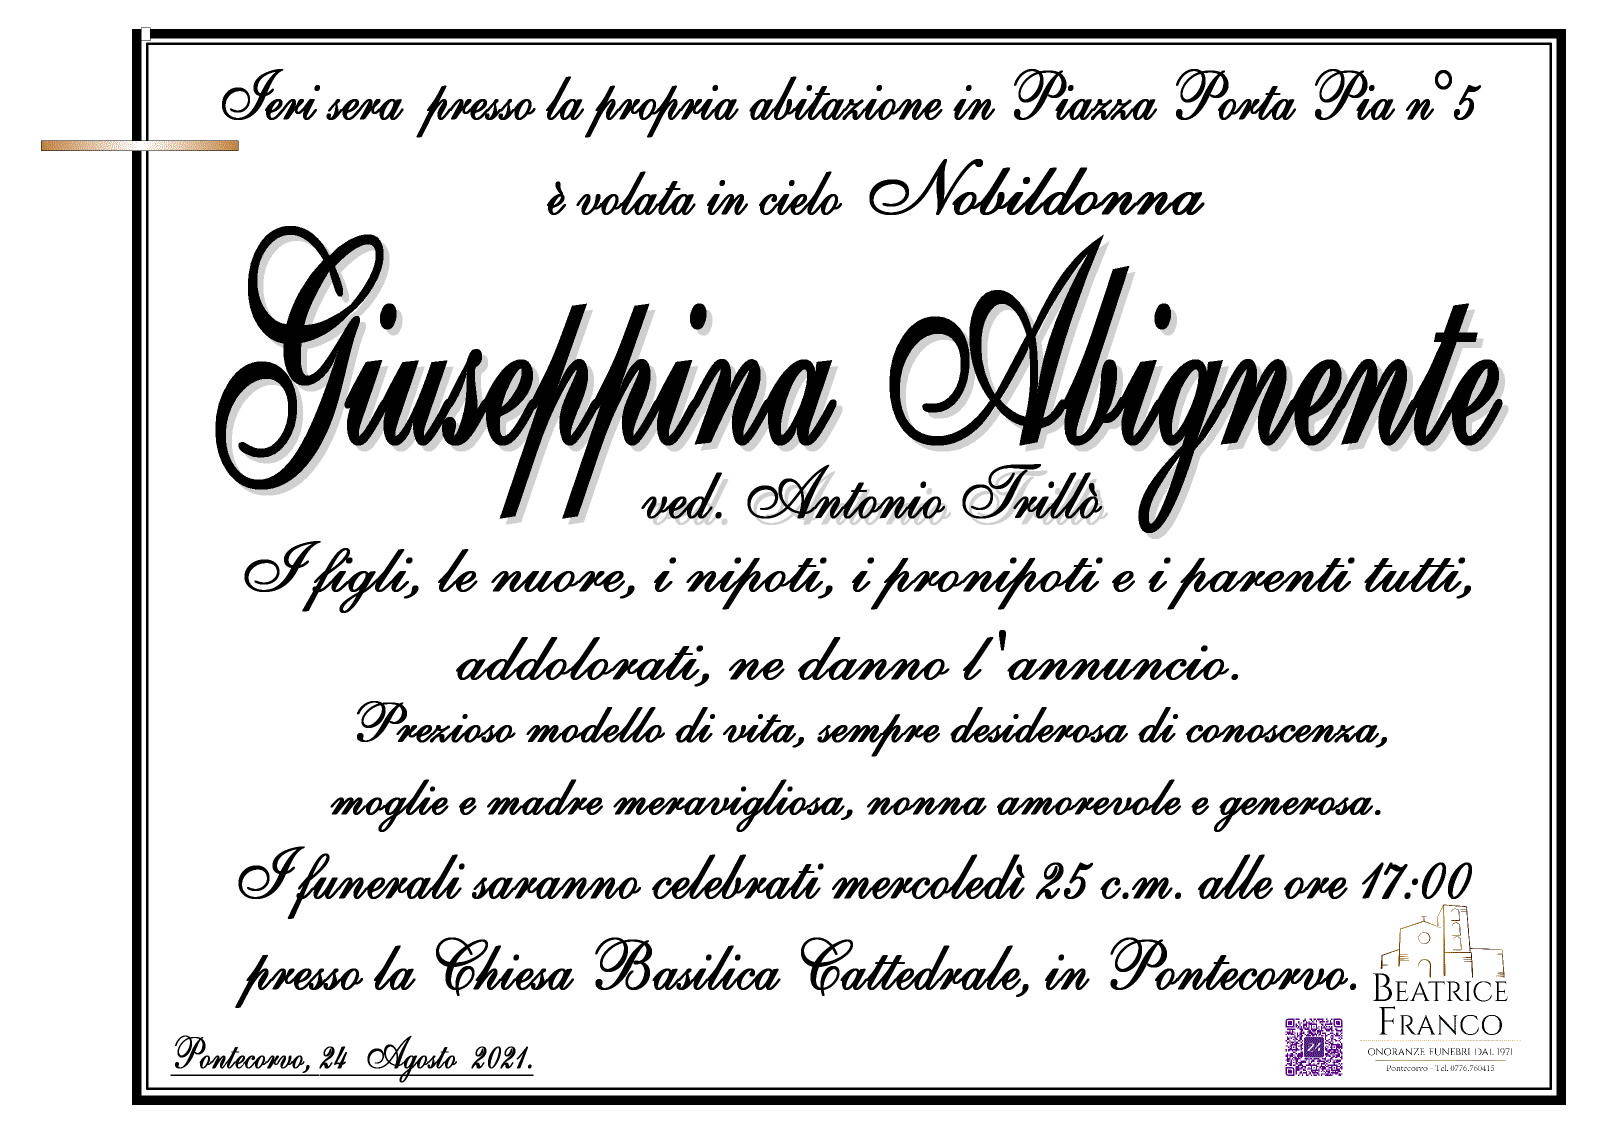 Giuseppina Abignente